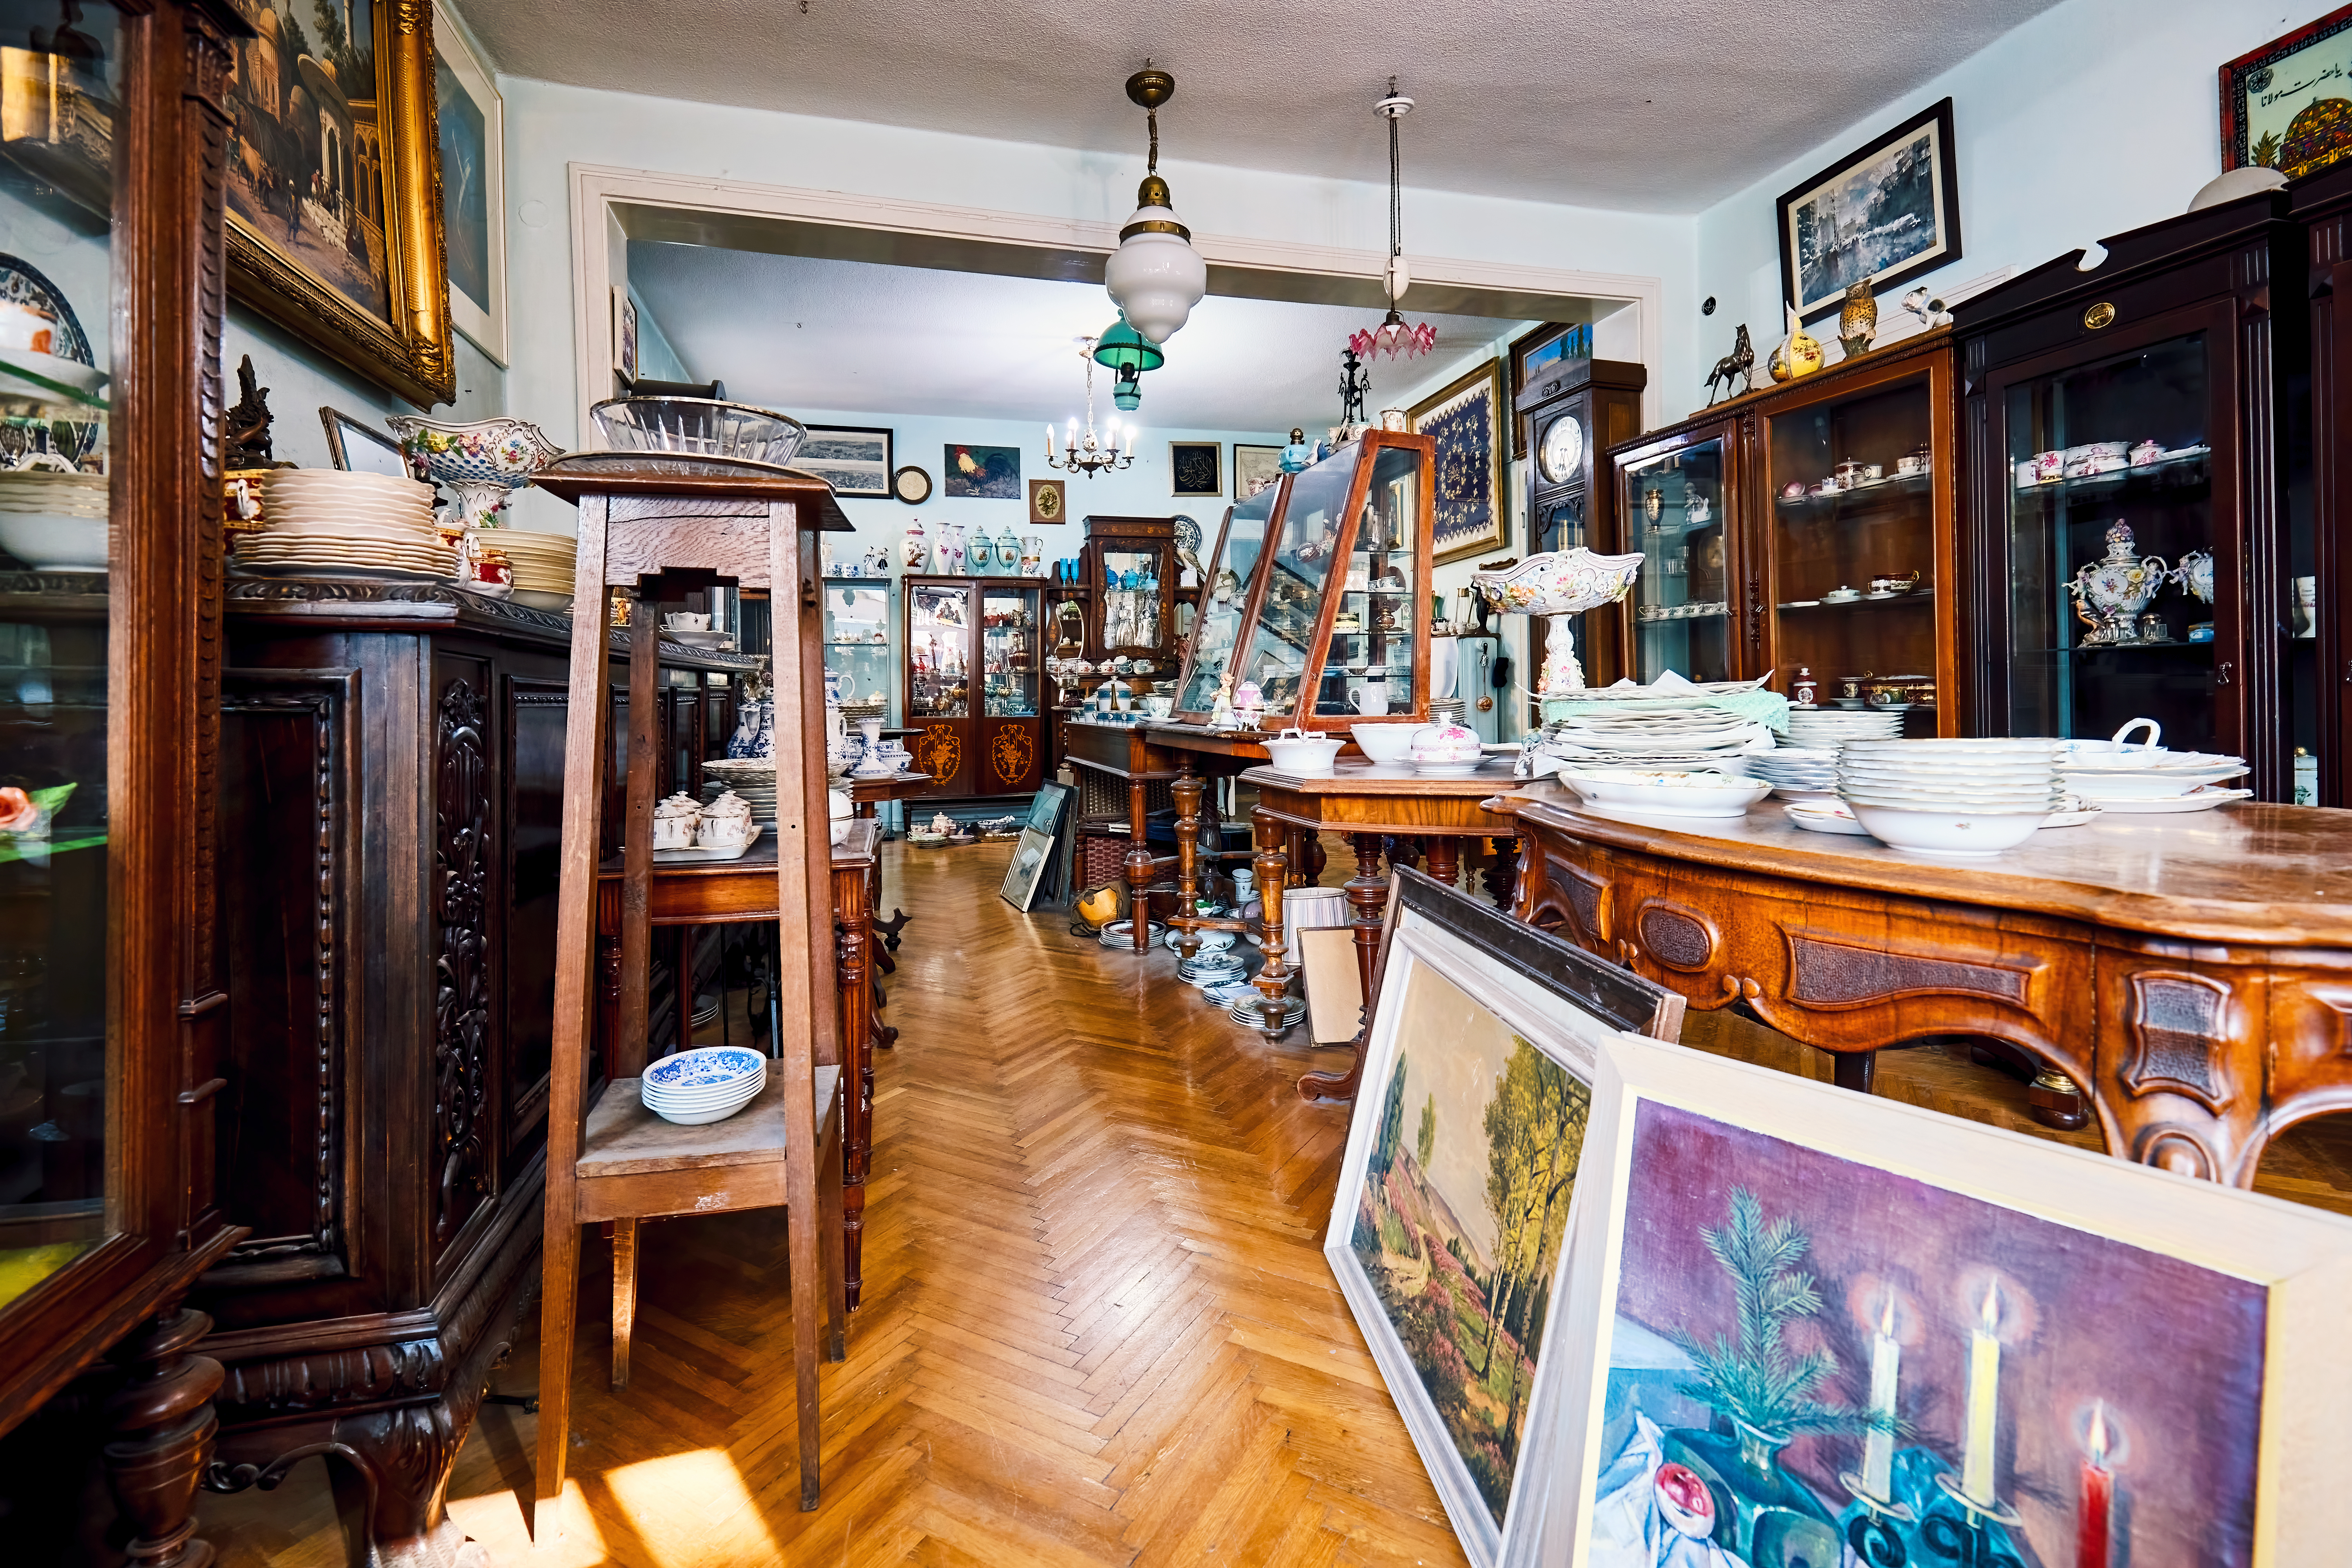 An old antique store | Source: Shutterstock.com